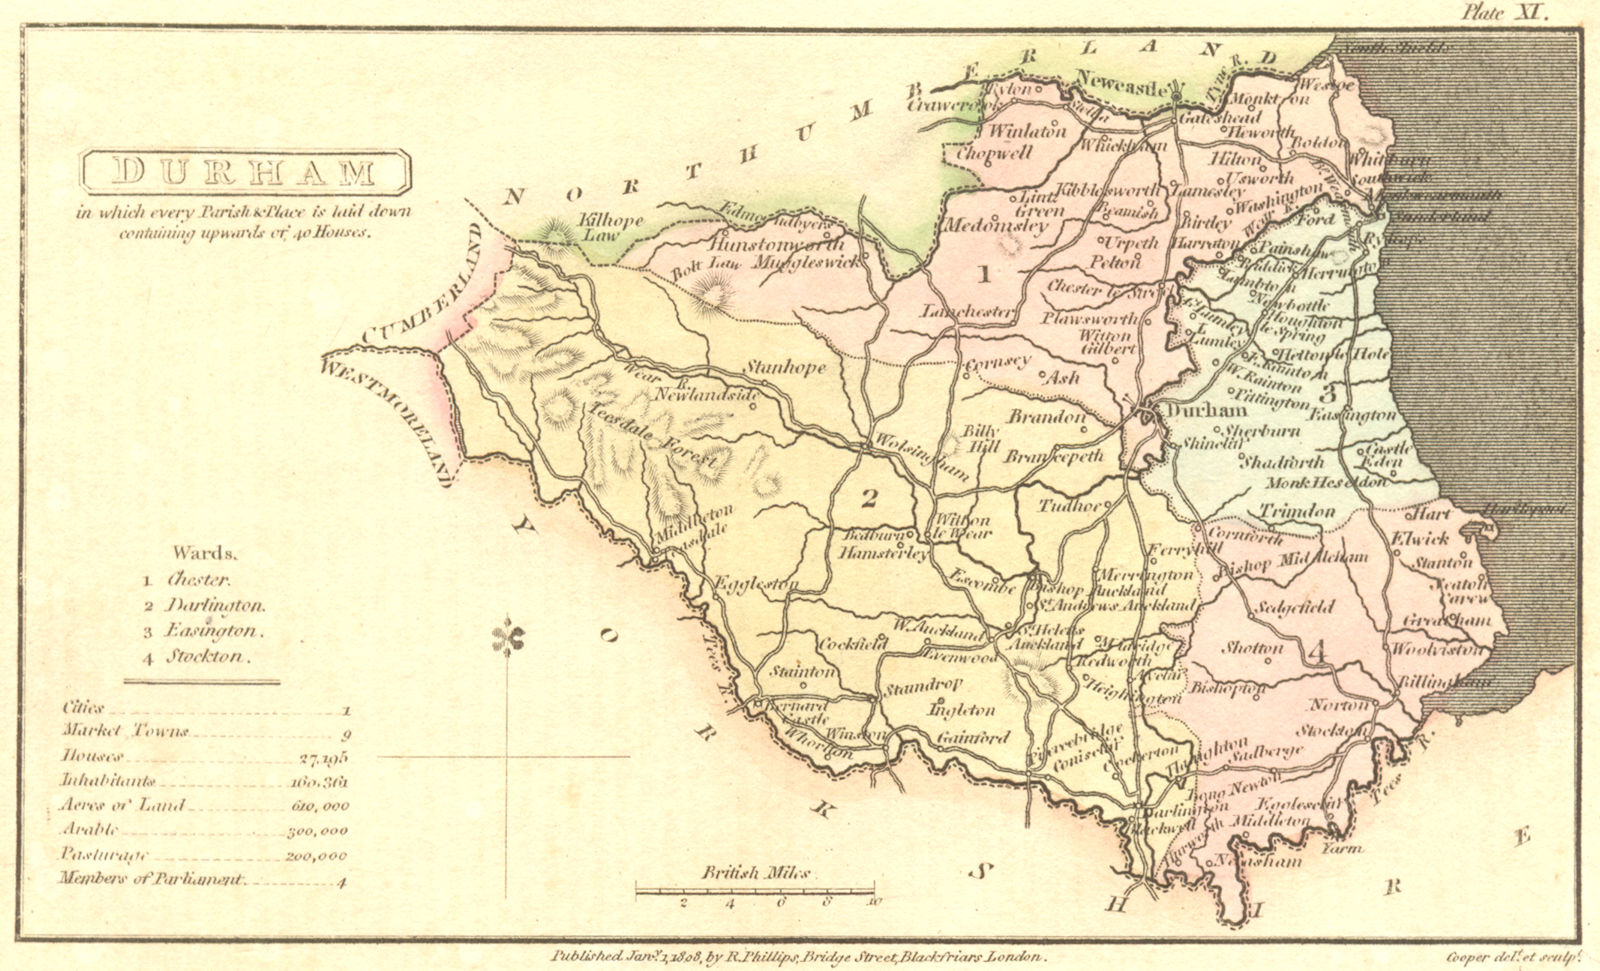 DURHAM. Capper. Scarce 1813 old antique vintage map plan chart